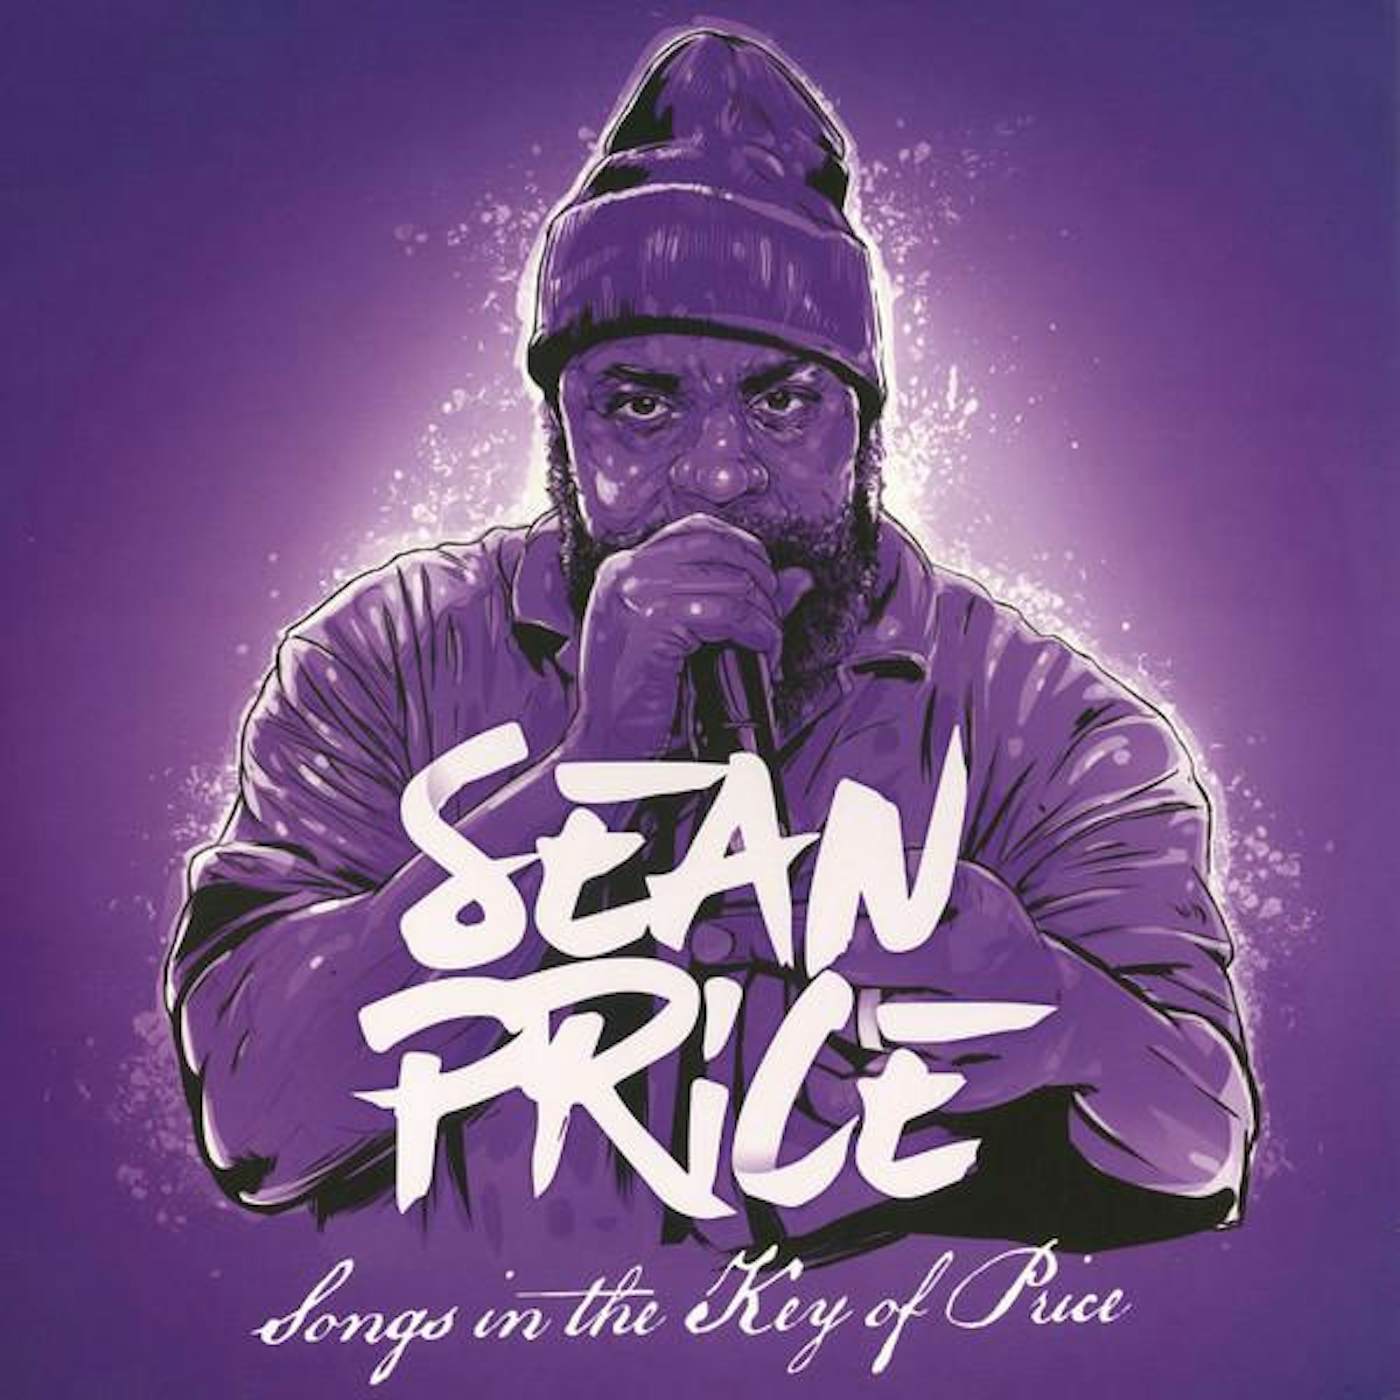 Sean Price Songs In The Key Of Price (Purple Splatter Vinyl Record) 